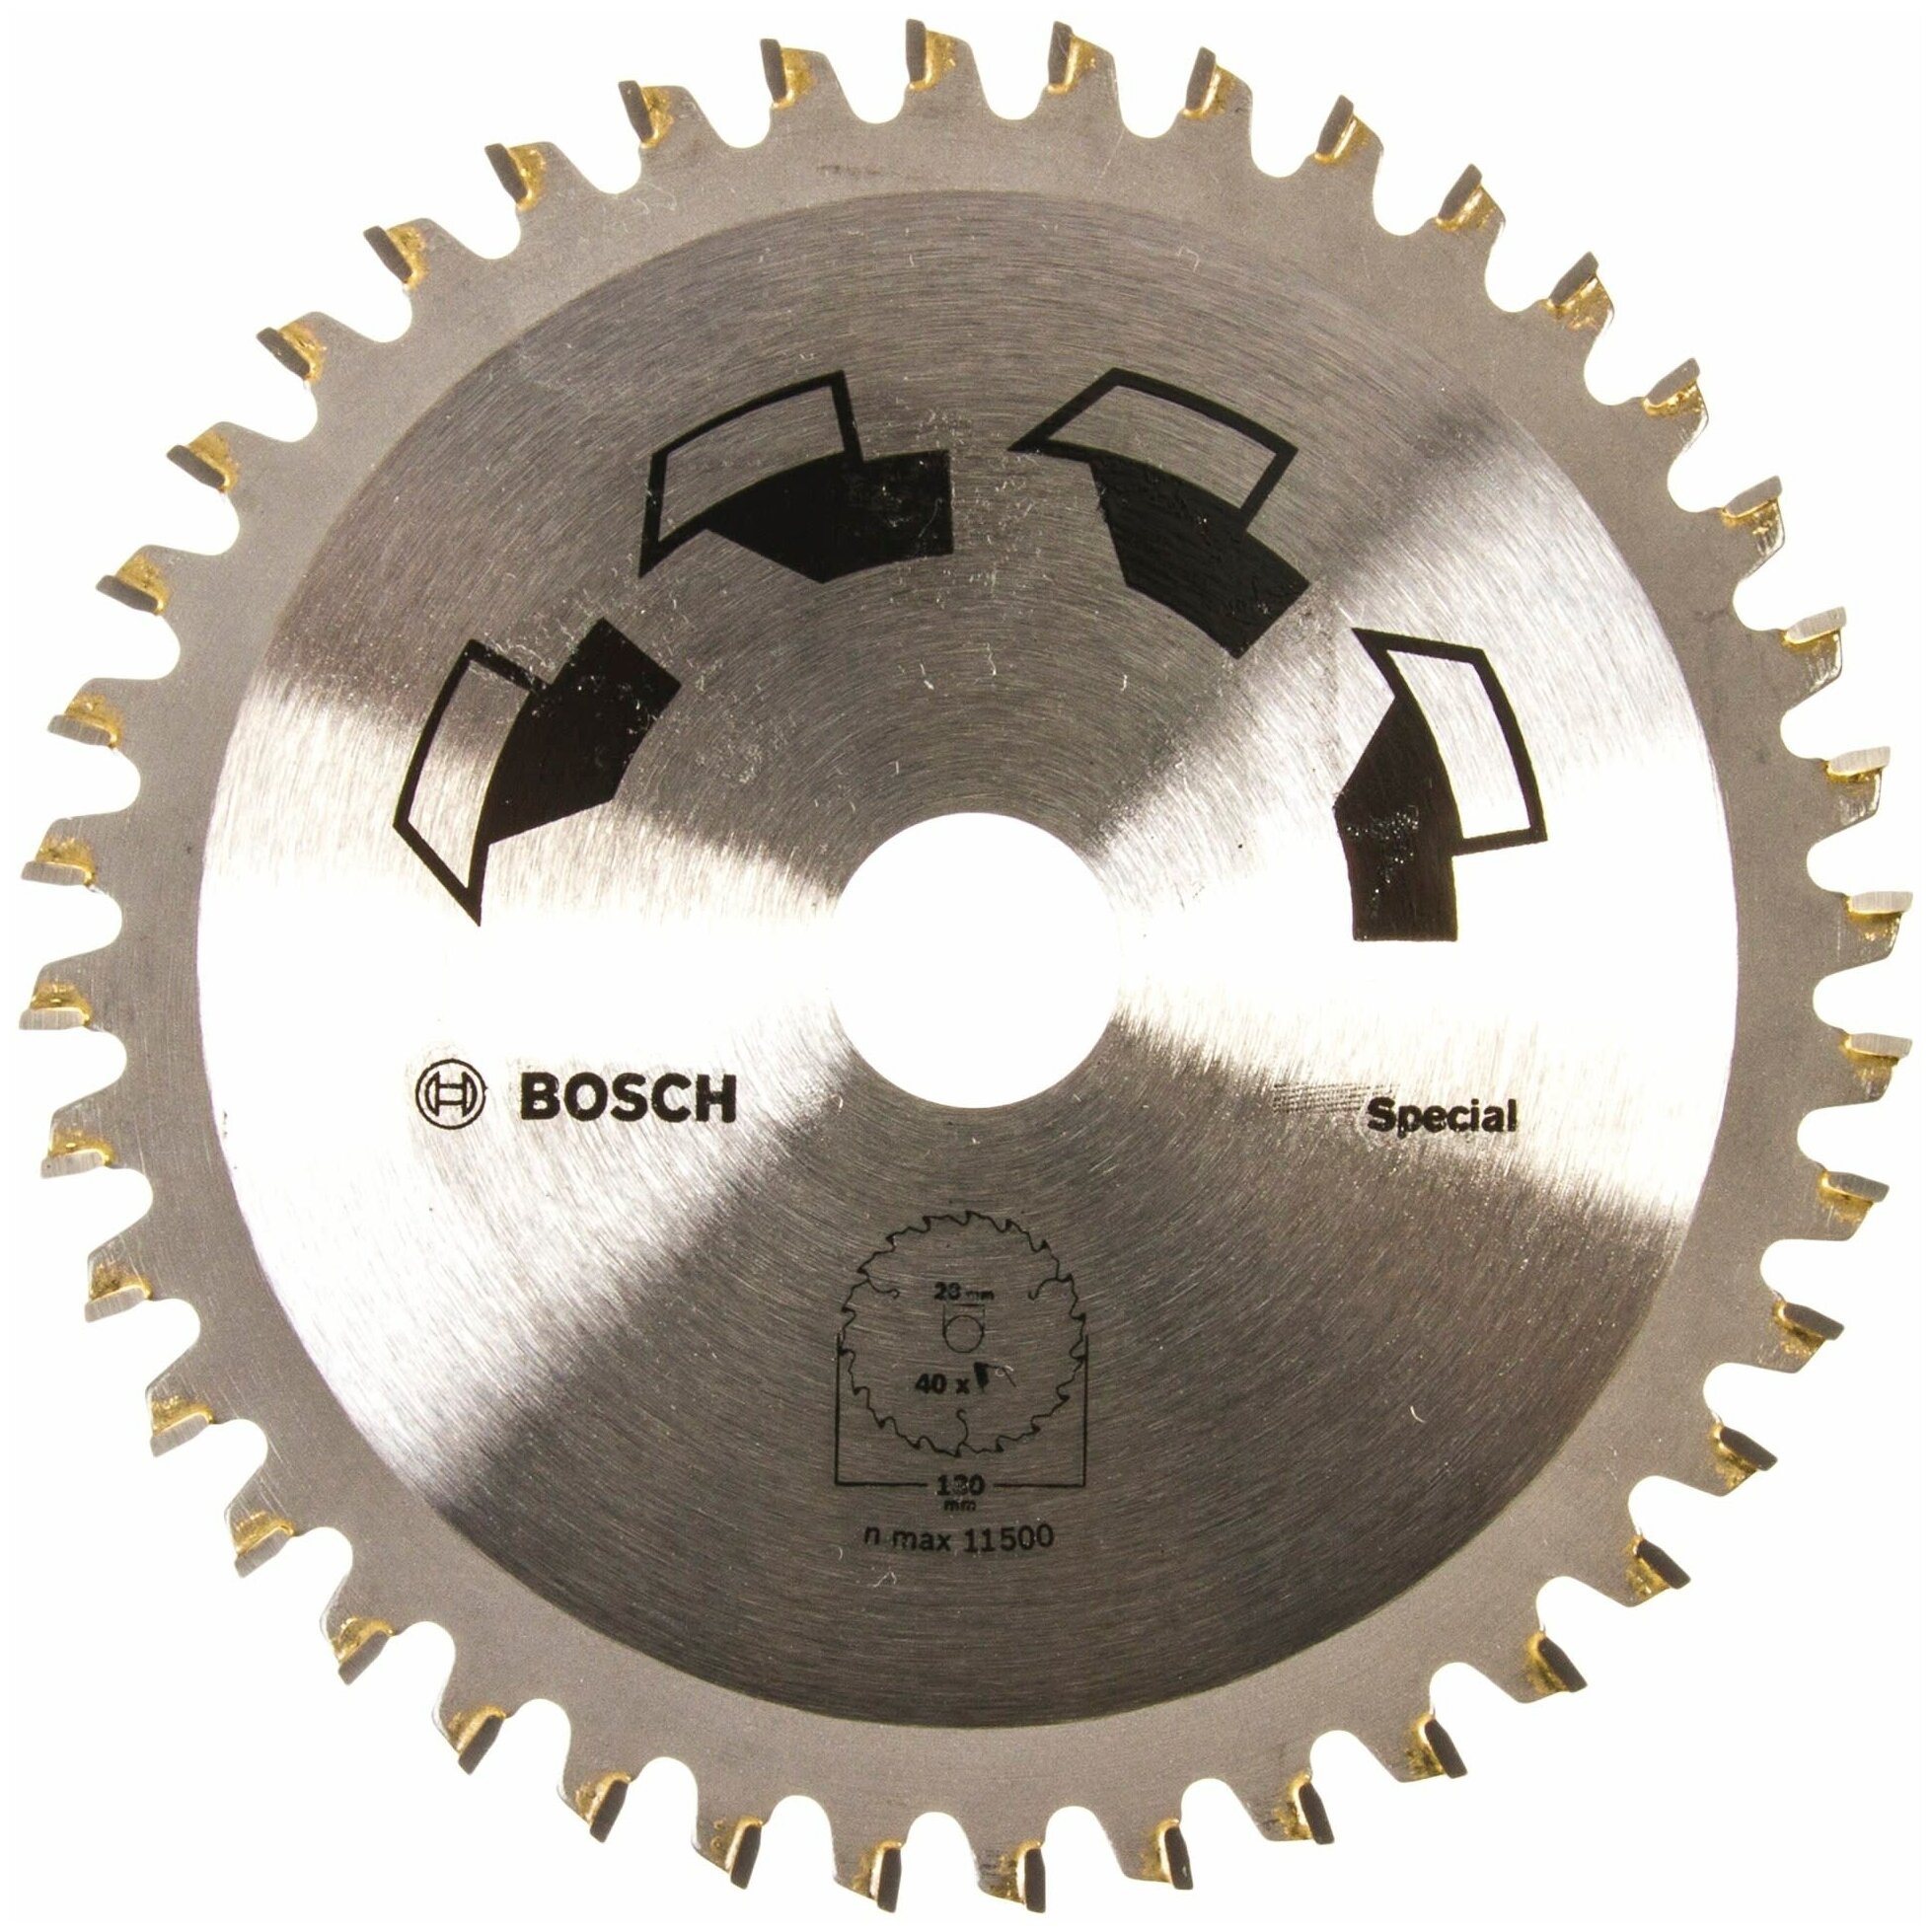 Bosch циркулярный диск 130x20/16 40 SPECIAL 2609256884